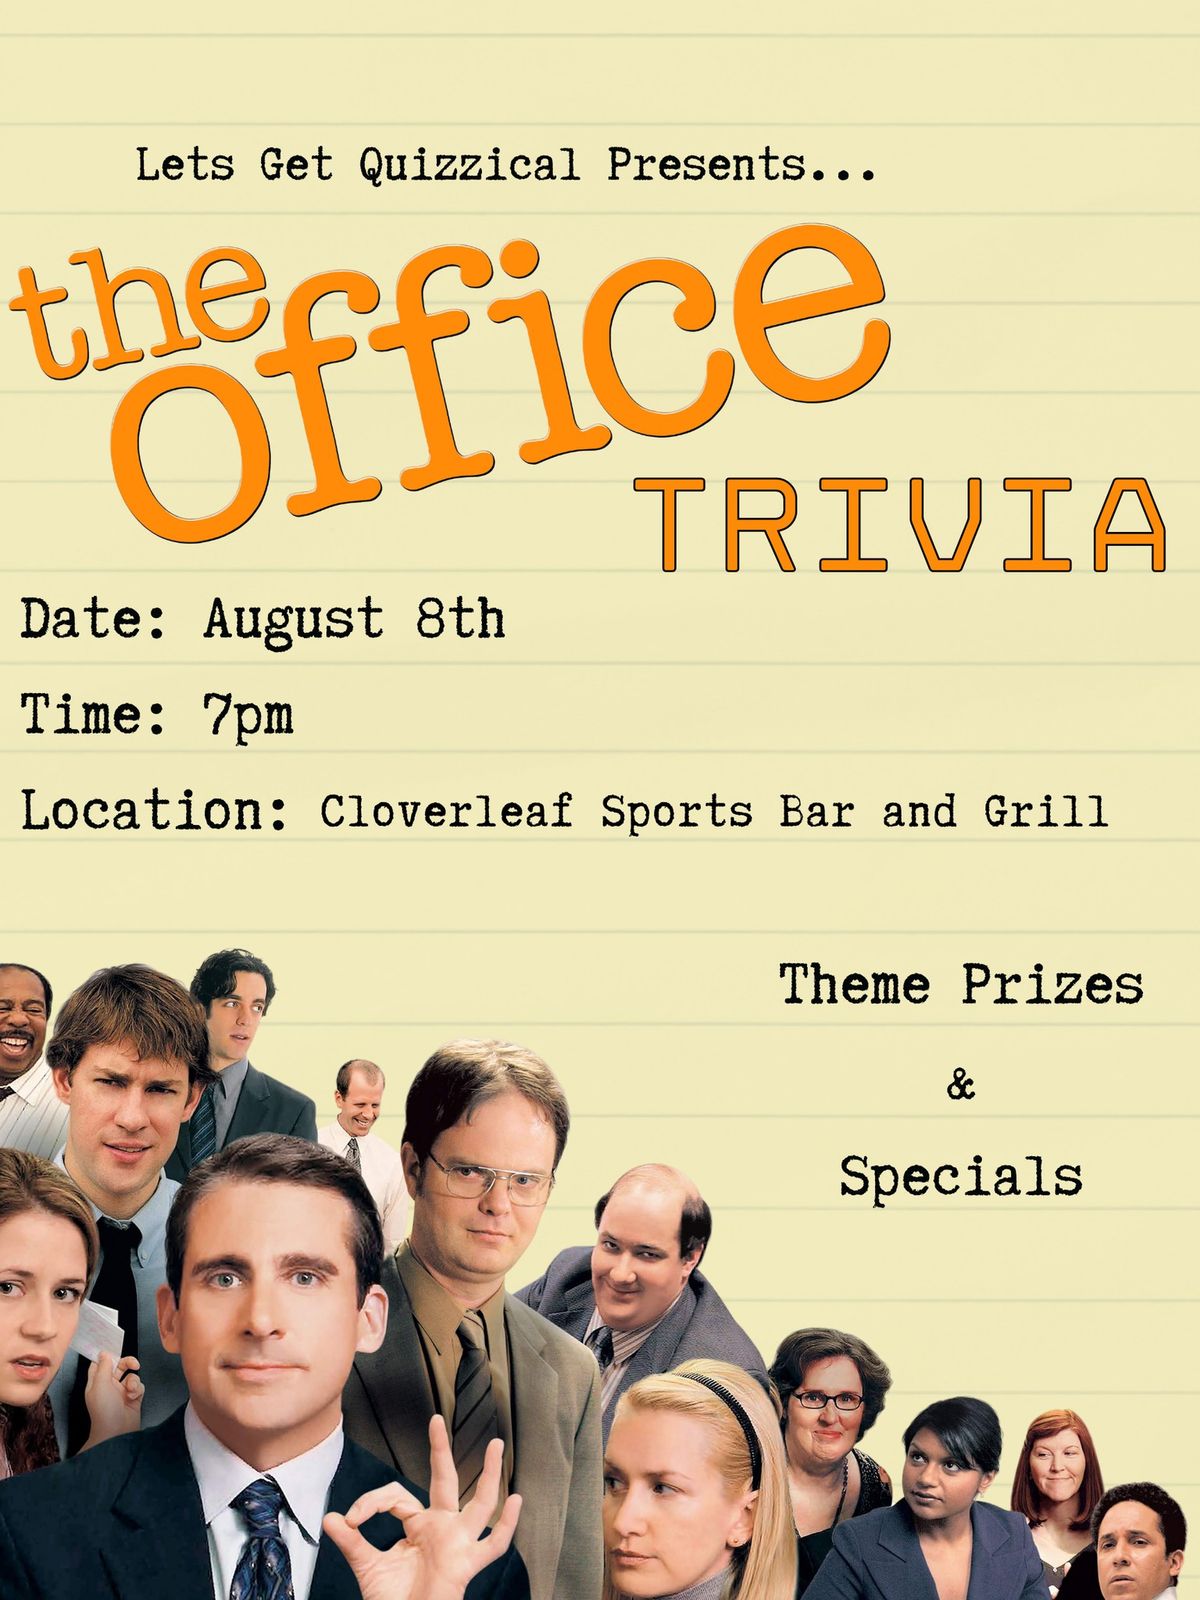 Cloverleaf Trivia - The Office